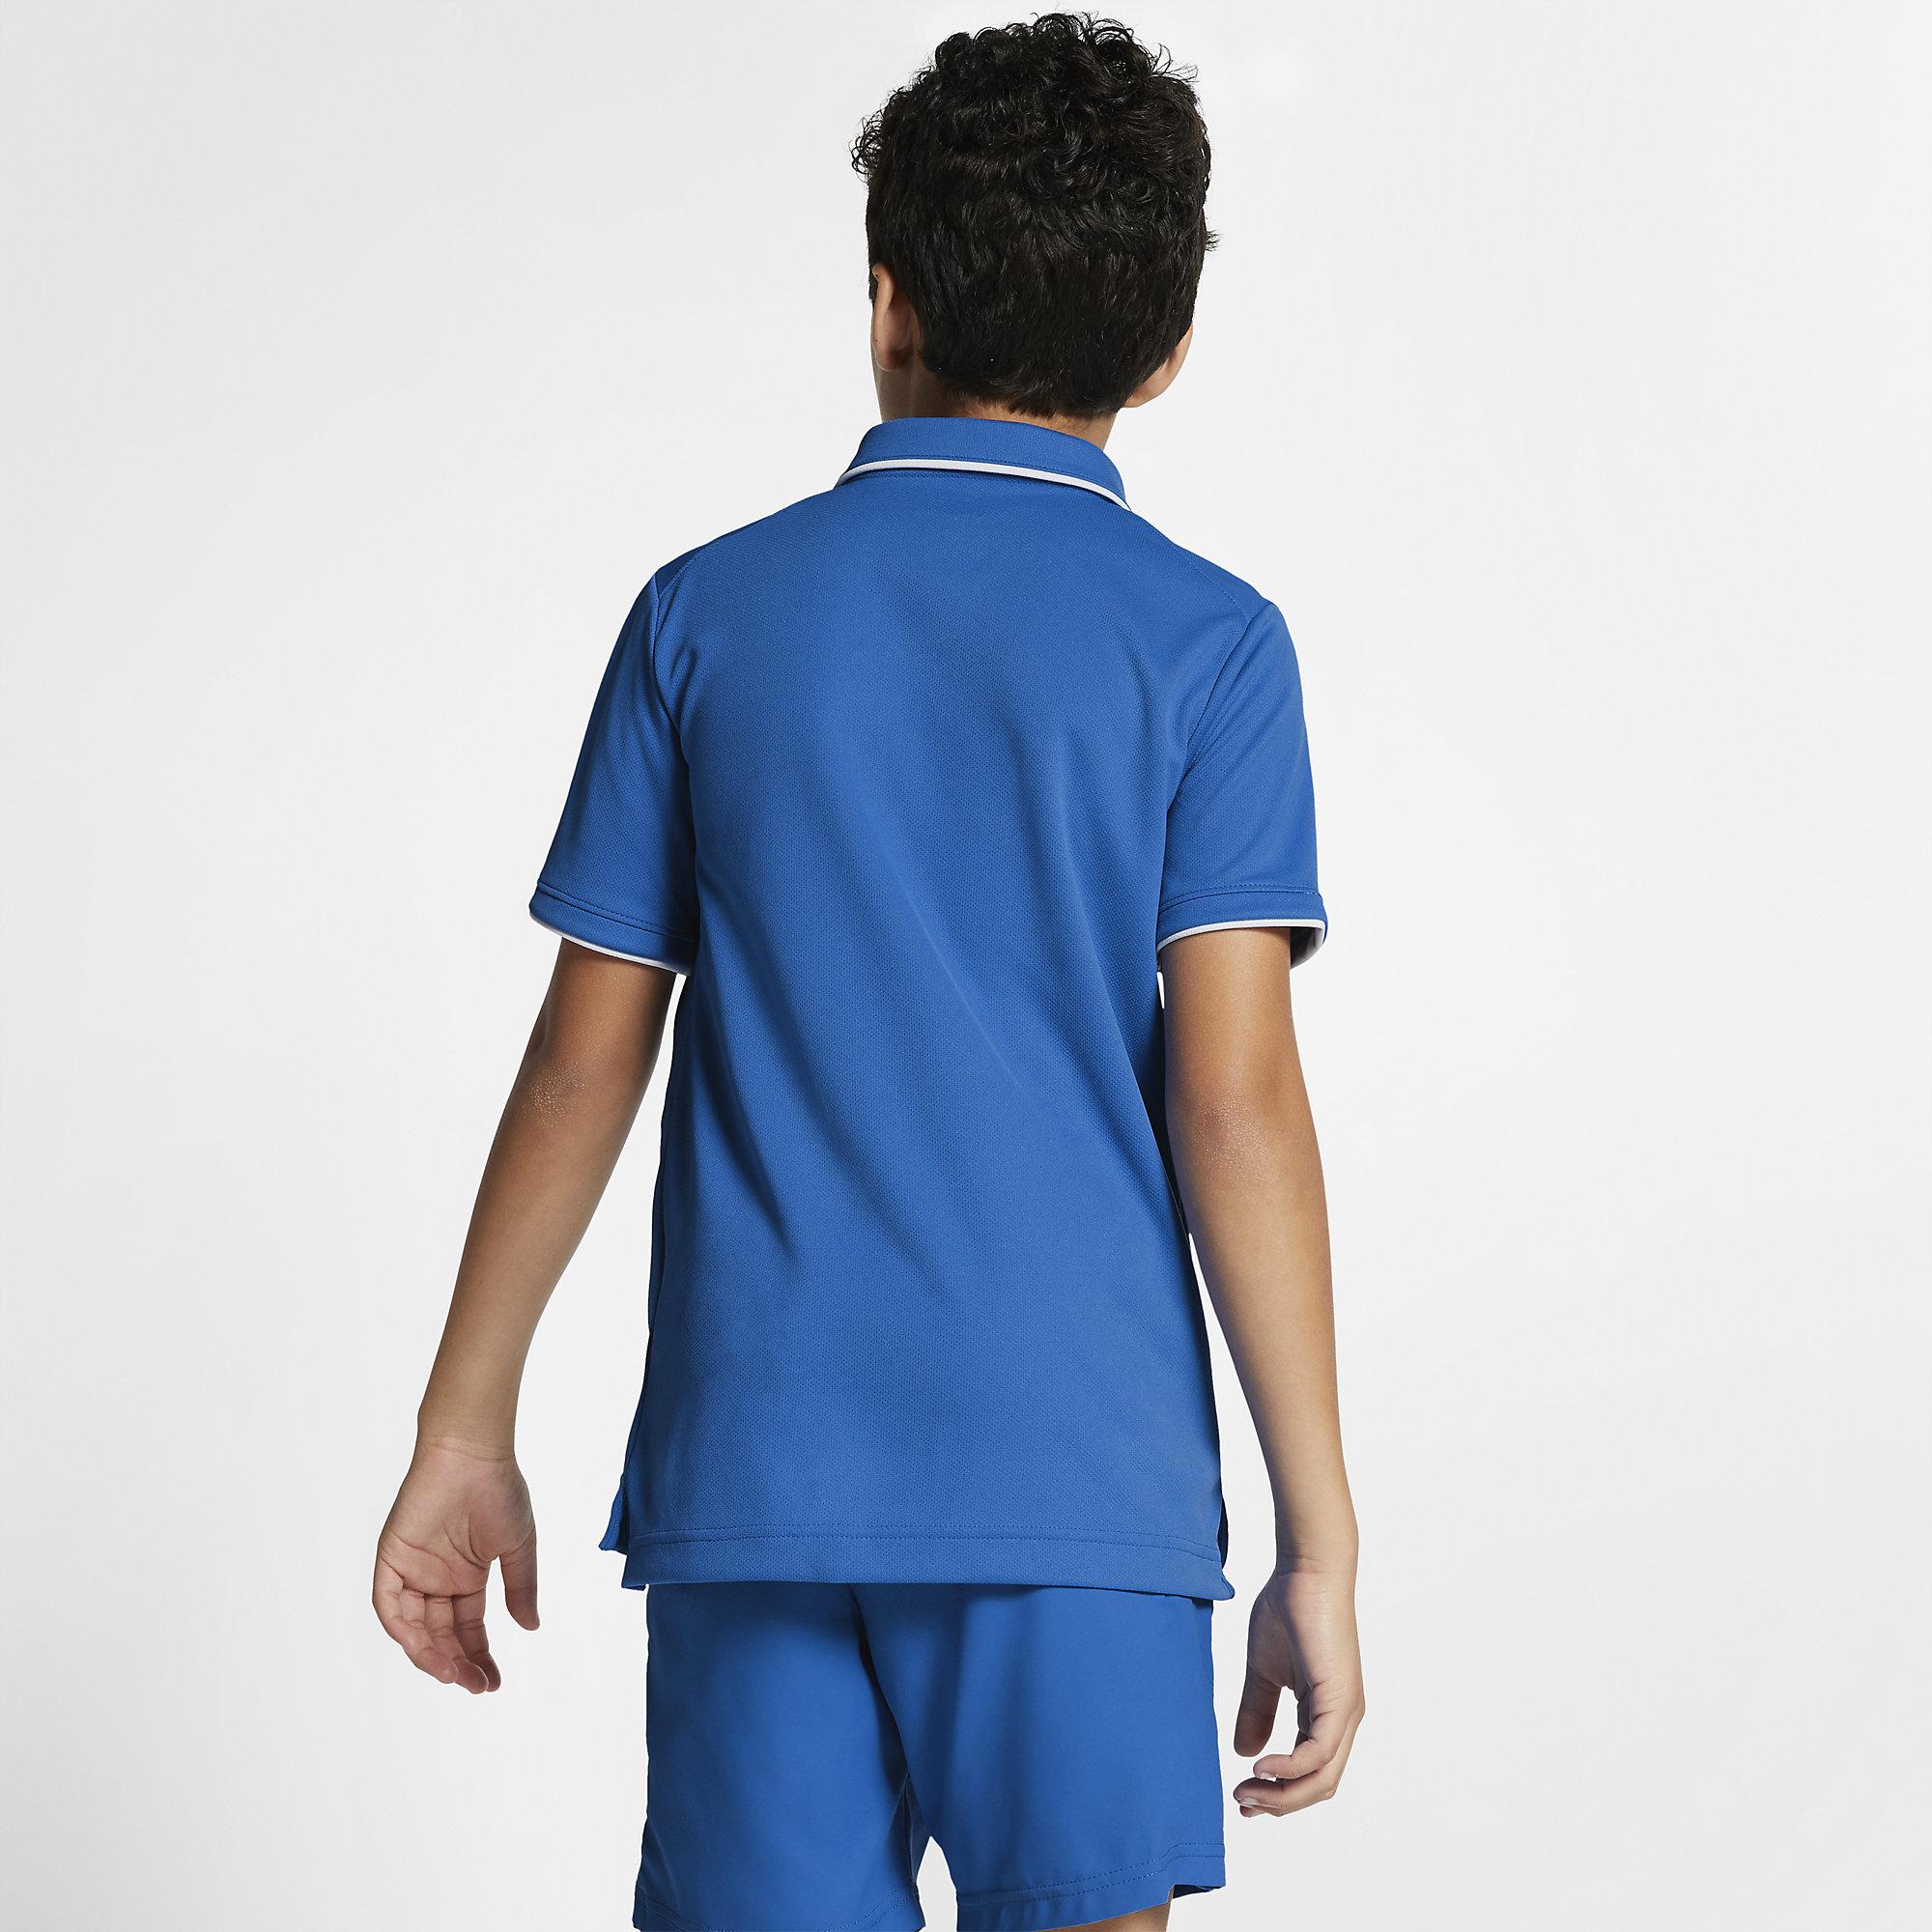 Nike Boys Dri-FIT Tennis Polo - Signal Blue - Tennisnuts.com